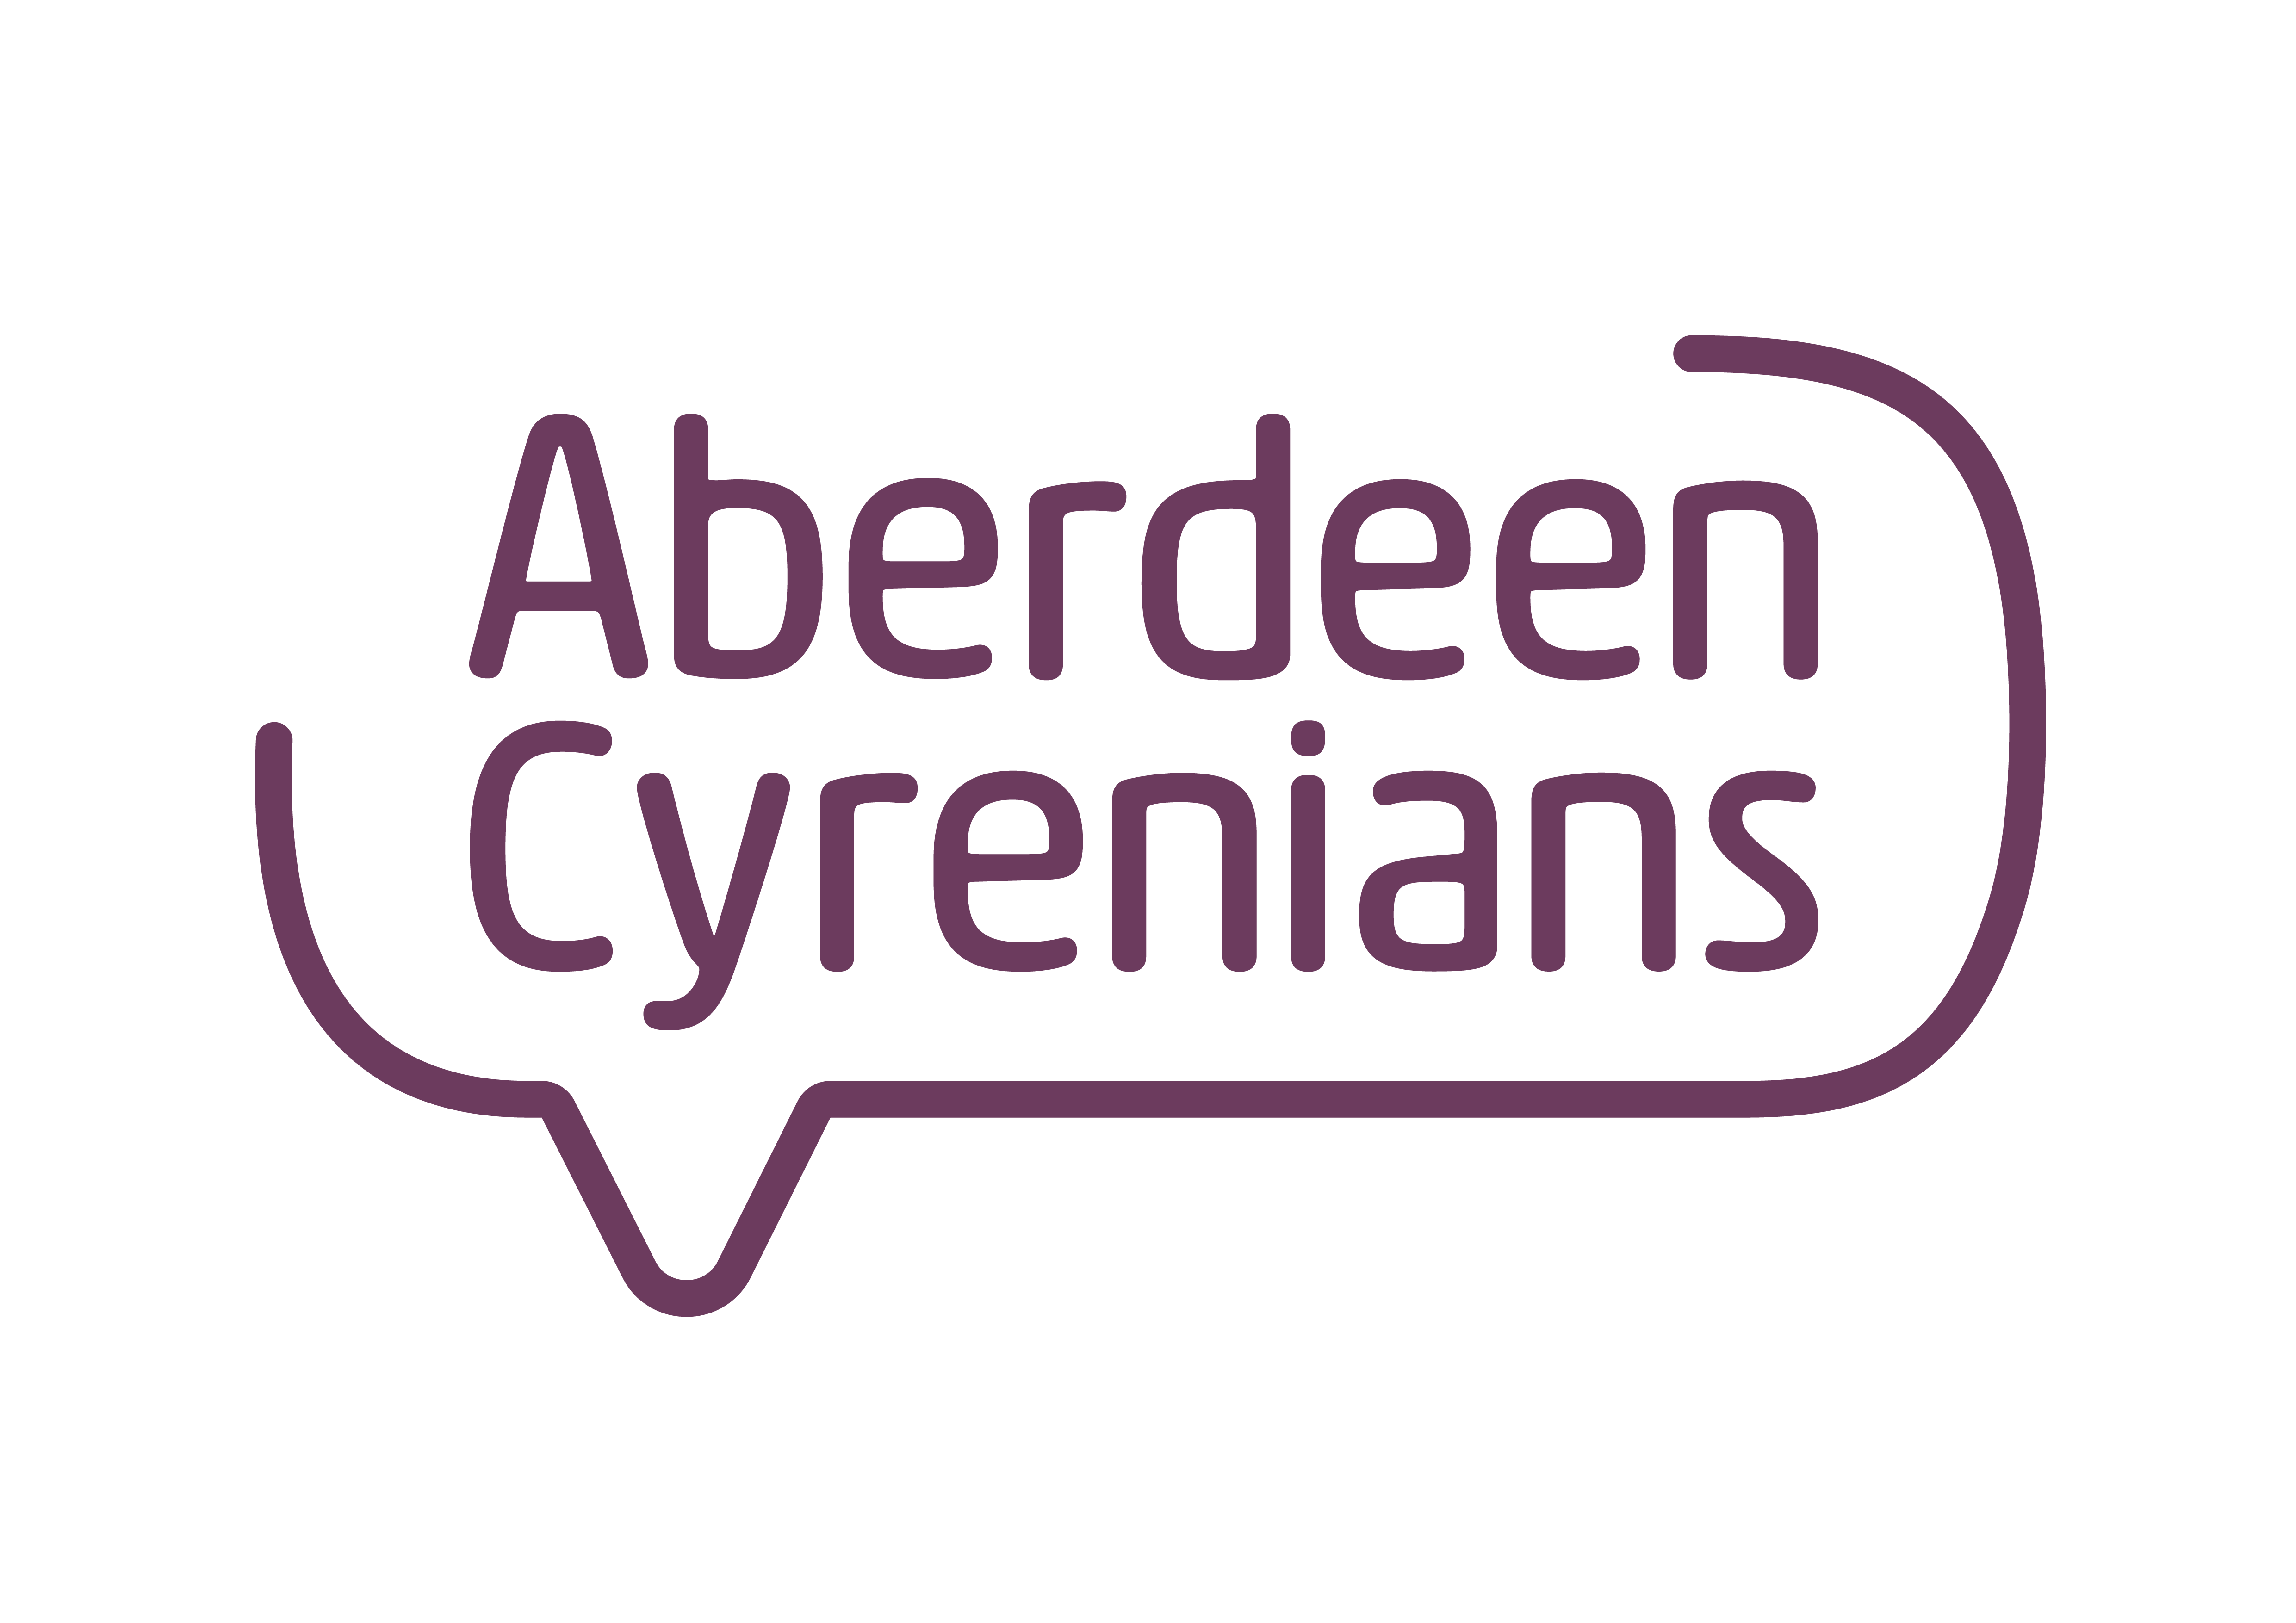 Aberdeen Cyrenians launches new peer support service